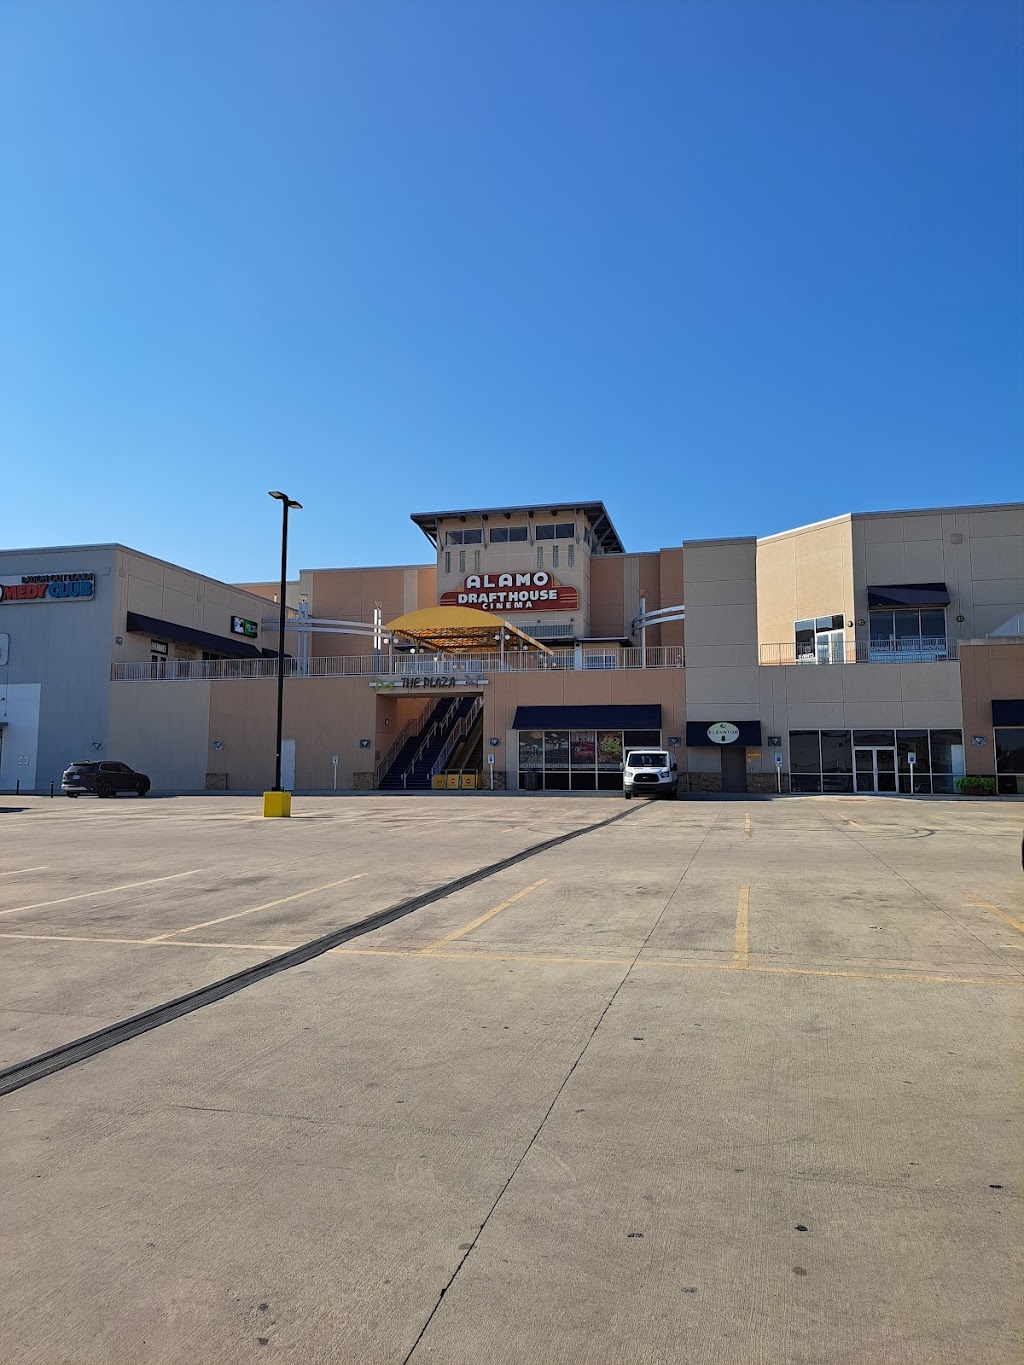 Alamo Drafthouse Cinema Park North | restaurant | 618 Northwest Loop 410, San Antonio, TX 78216, USA | 2106778500 OR +1 210-677-8500